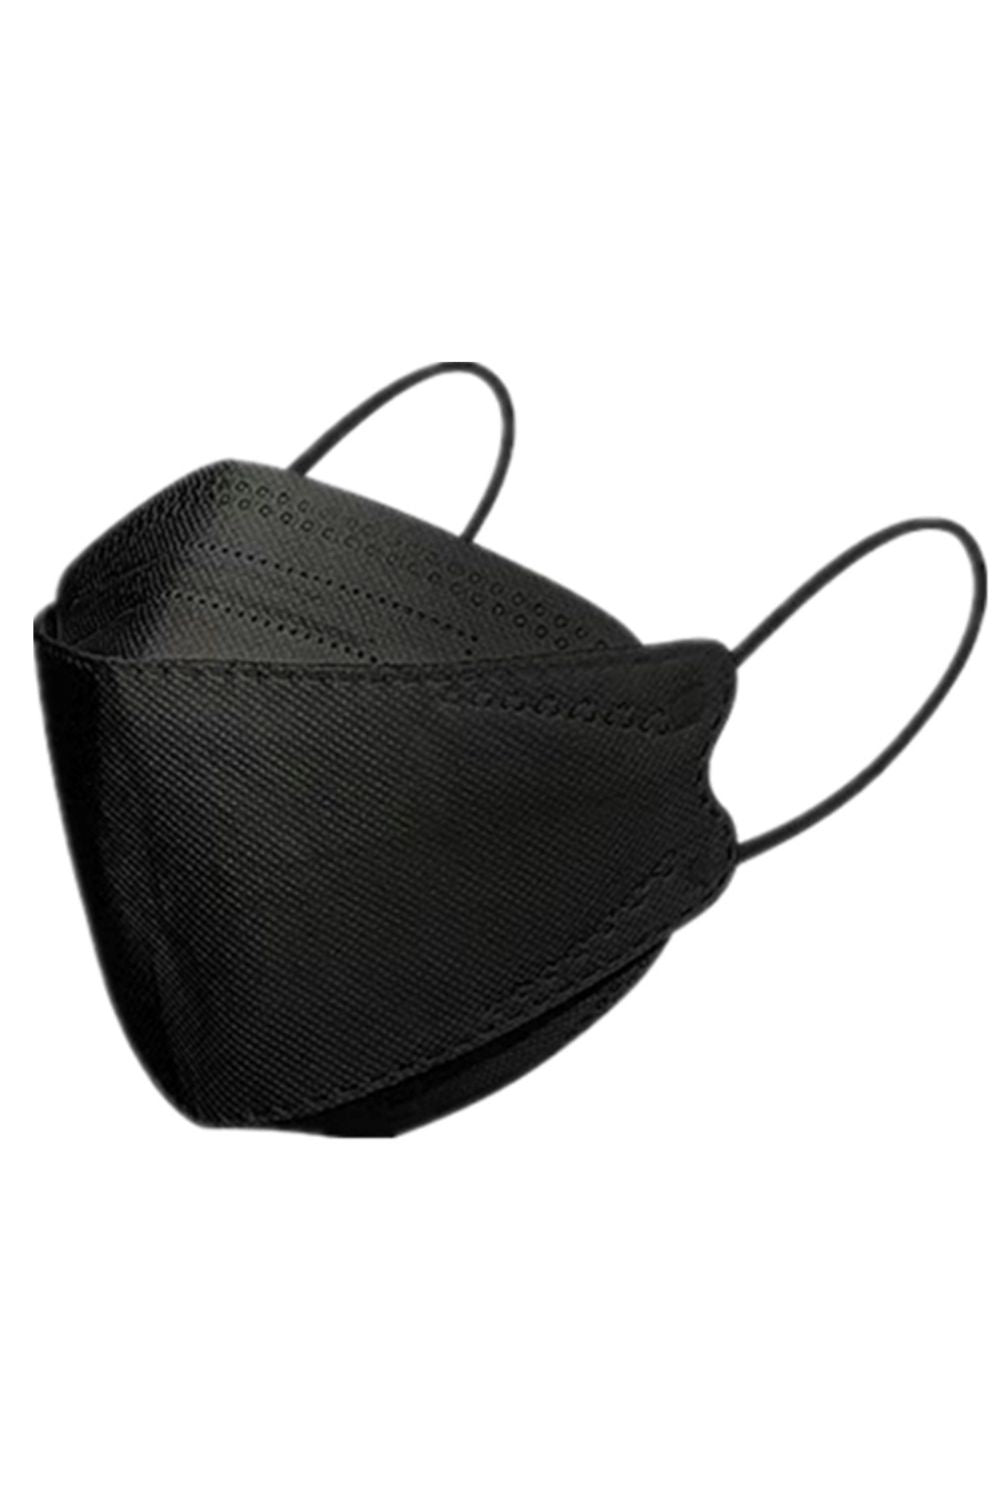 KF94 Breathable Non Medical Face Mask - Plain Black - Pack of 10